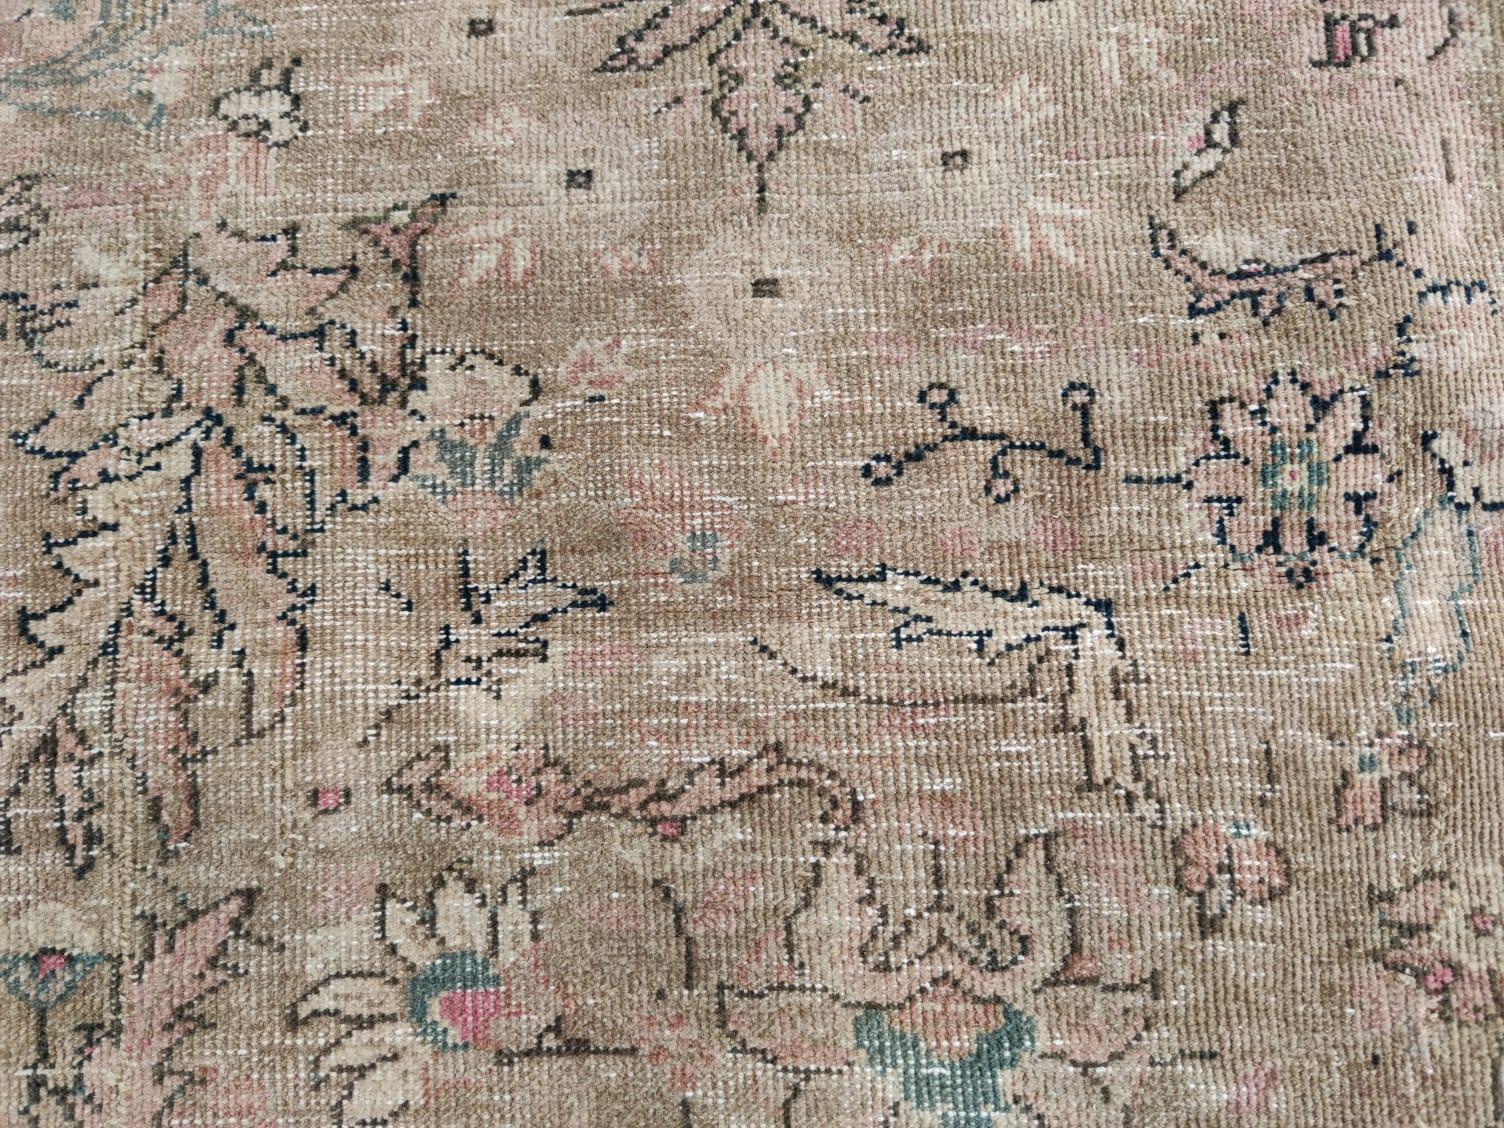 8.5x11 Ft Vintage Handmade Floral Pattern Turkish Wool Area Rug in Tawny Brown 9